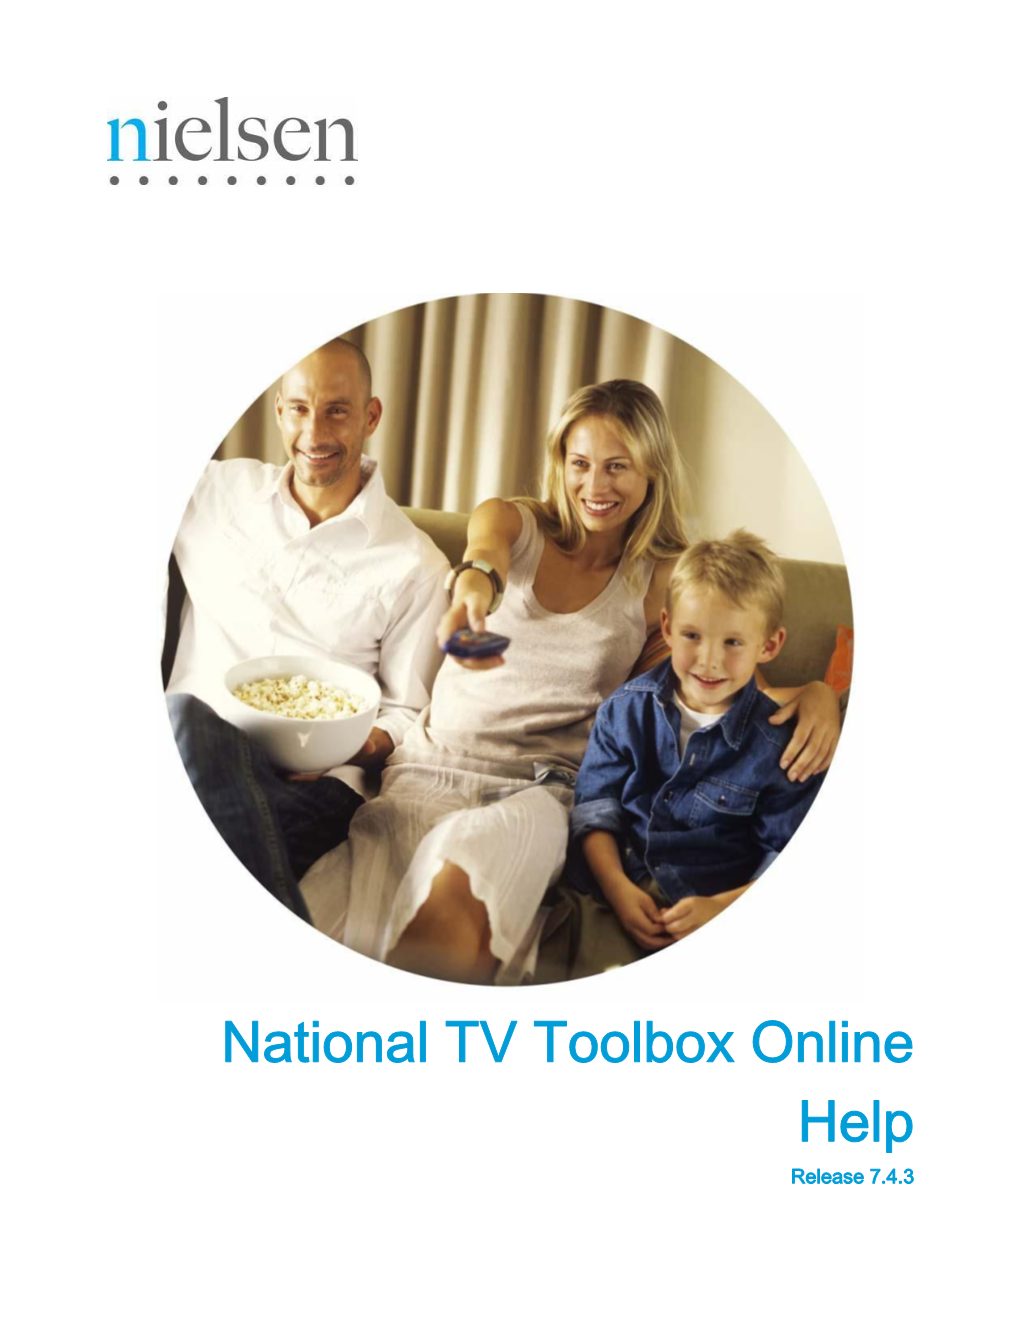 National TV Toolbox Online Help Release 7.4.3 Document: National TV Toolbox Online Help Document Version: 7.4.3 Revised: 06/05/2017